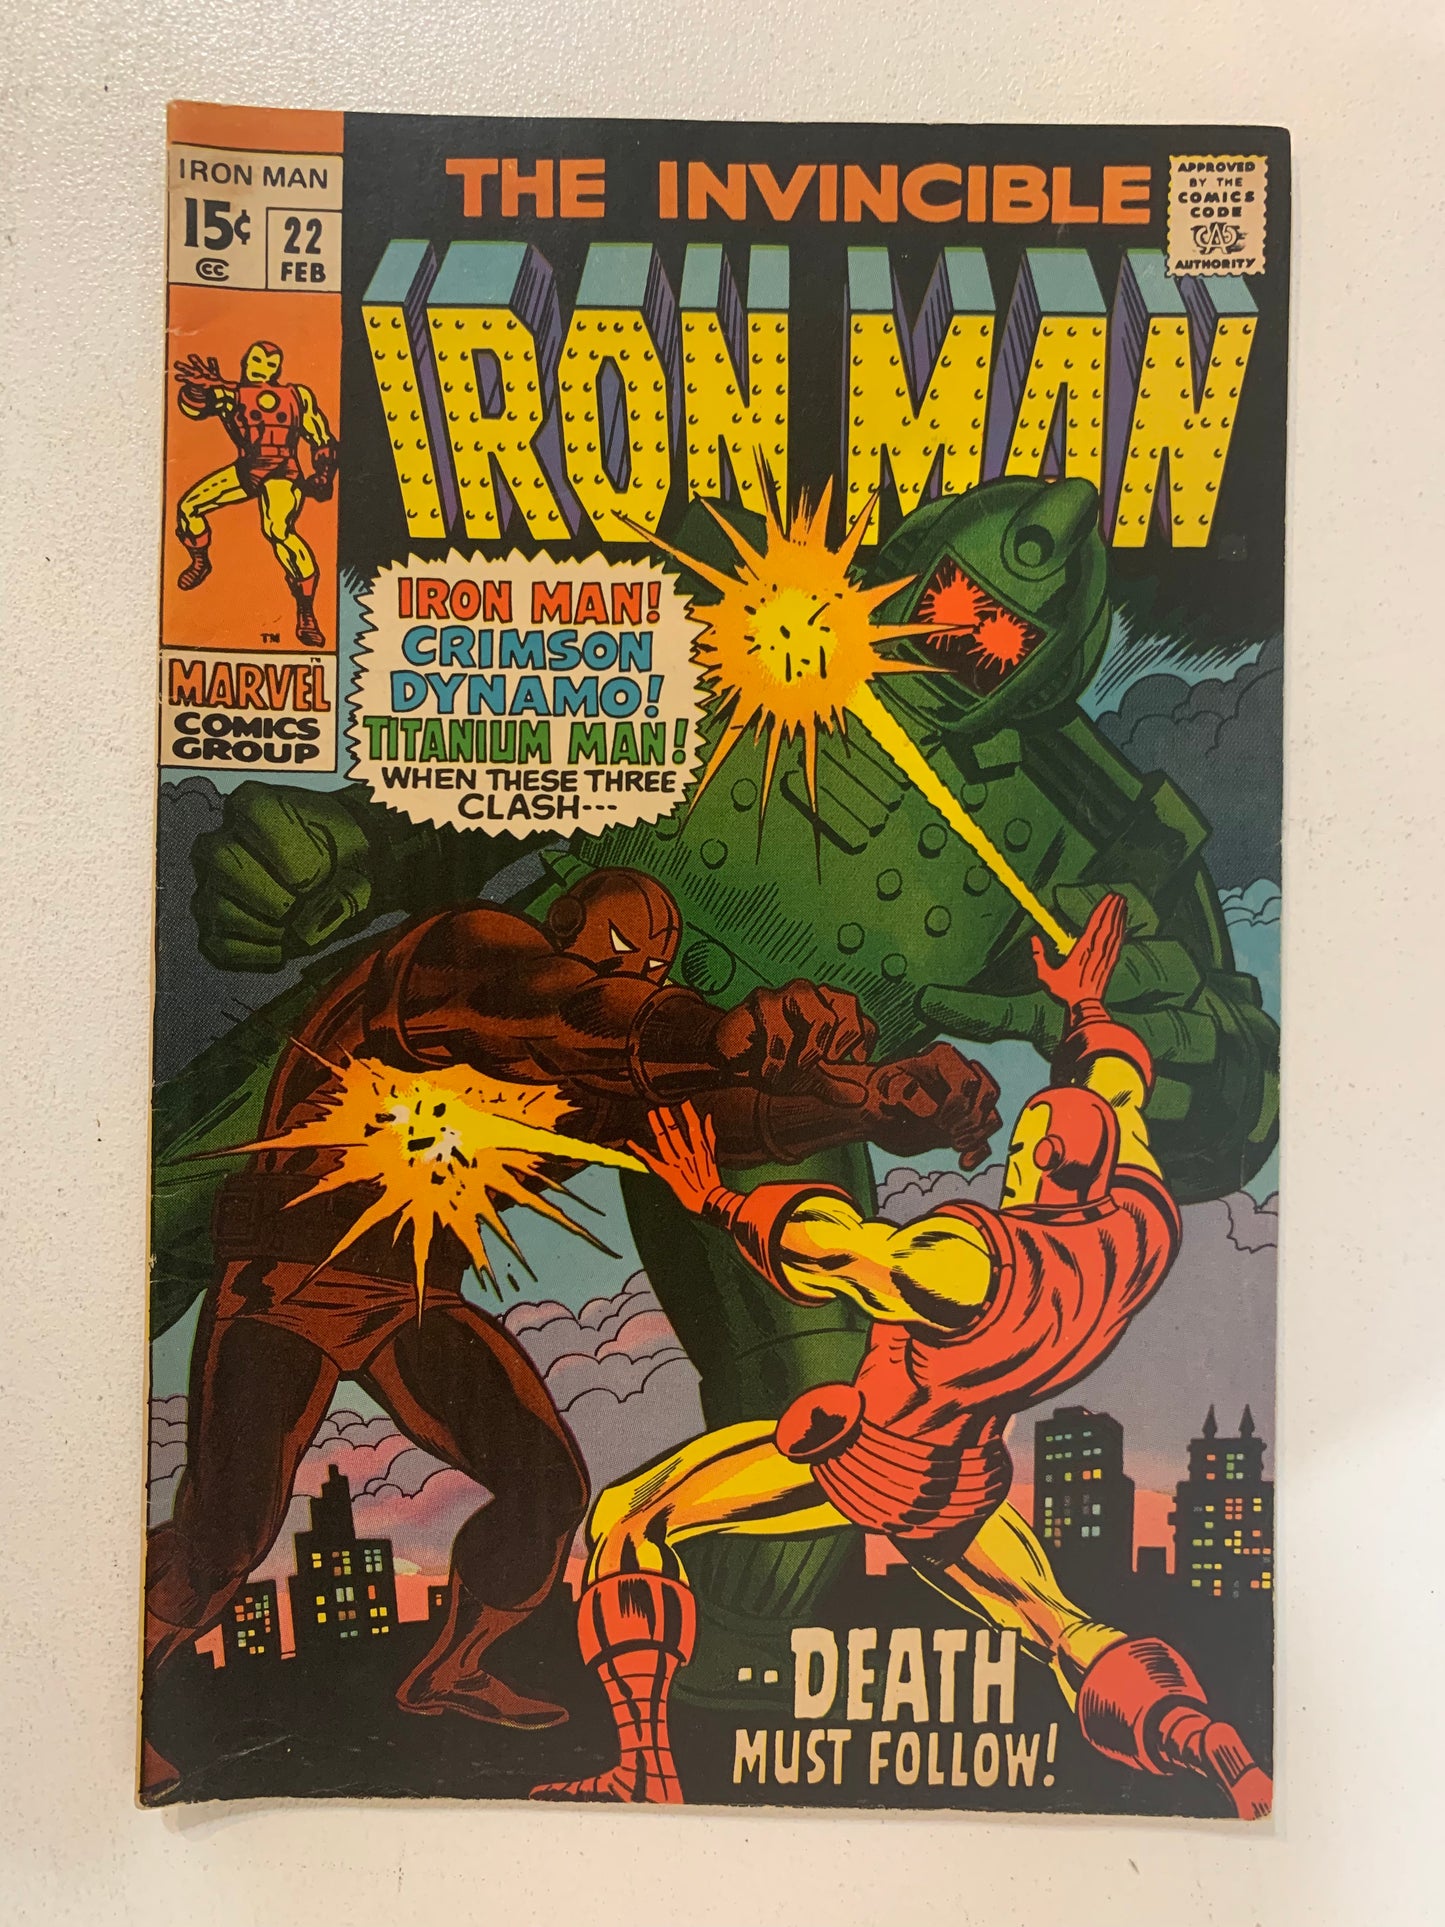 The Invincible Iron Man #22